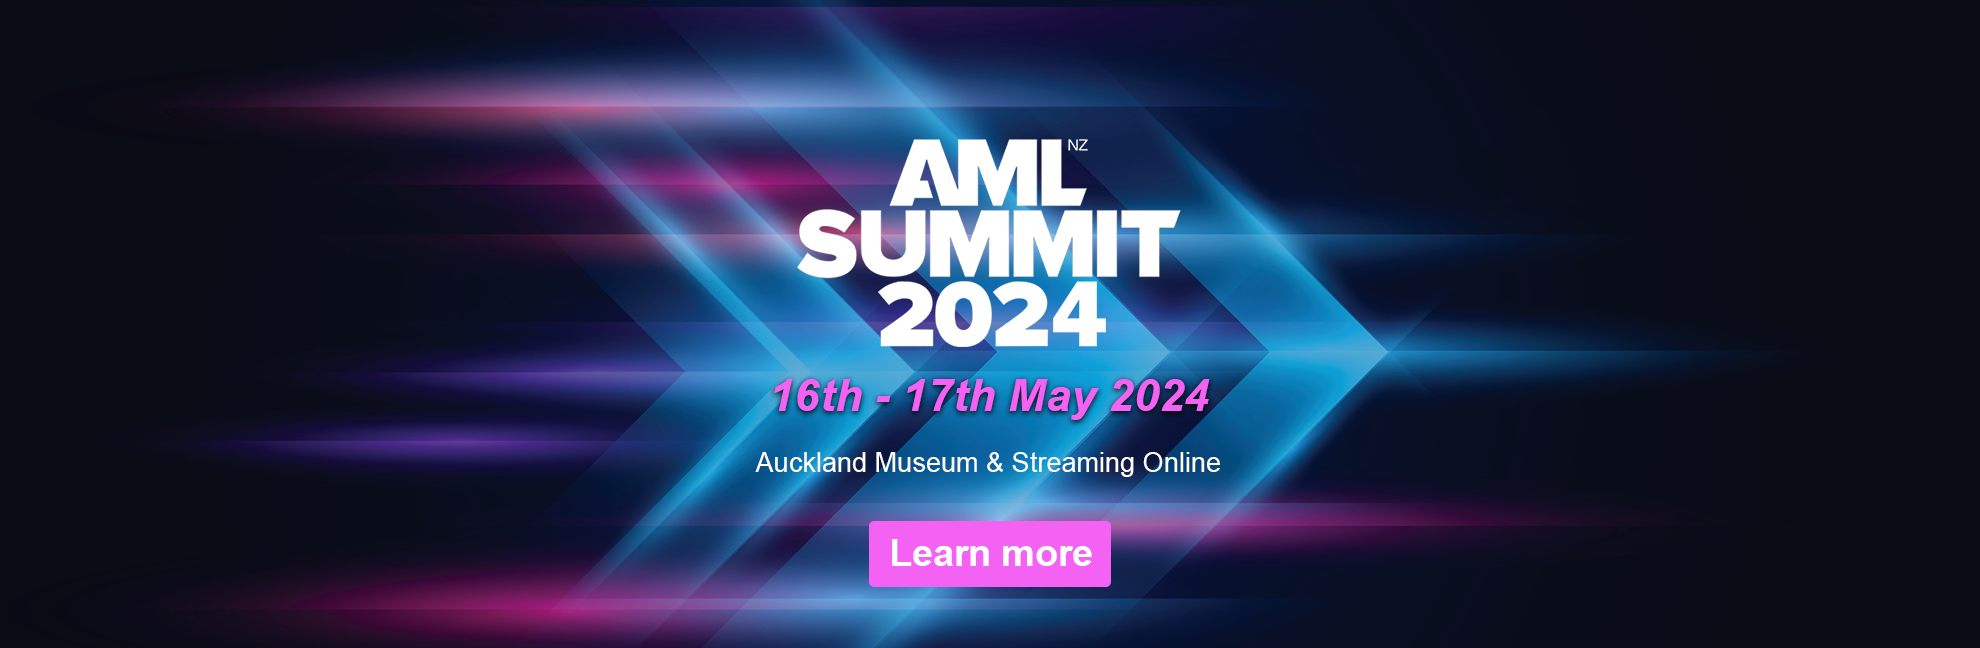 AML SUMMIT 2024 announced